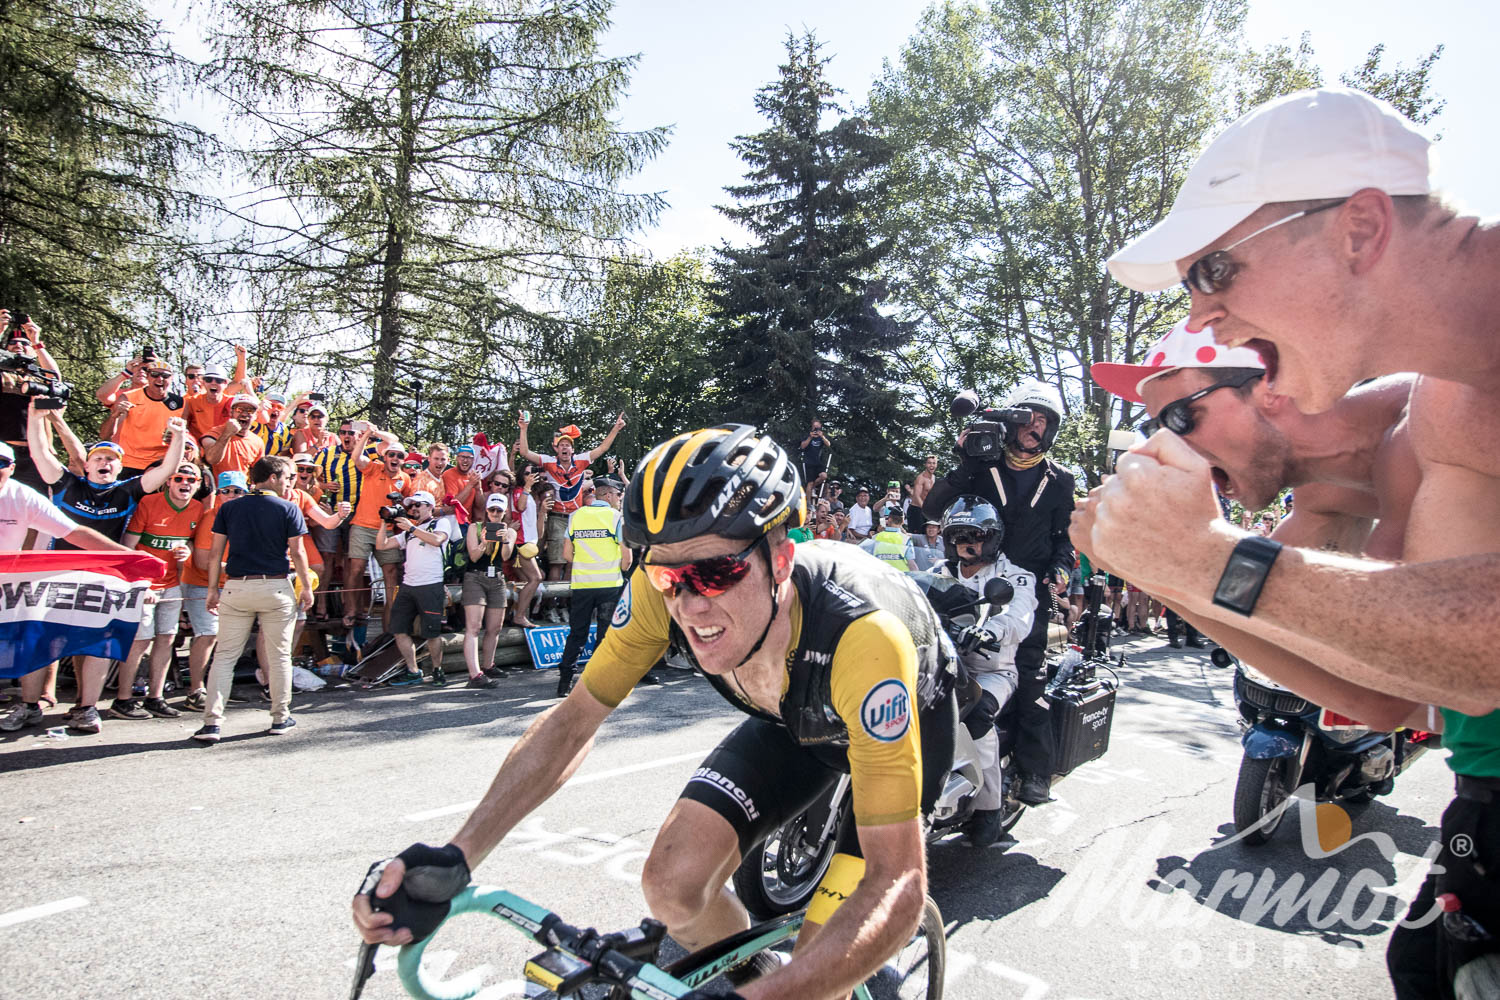 Tour de France pro cyclist L'Alpe d'Huez cycling climb on Marmot Tours road cycling holiday